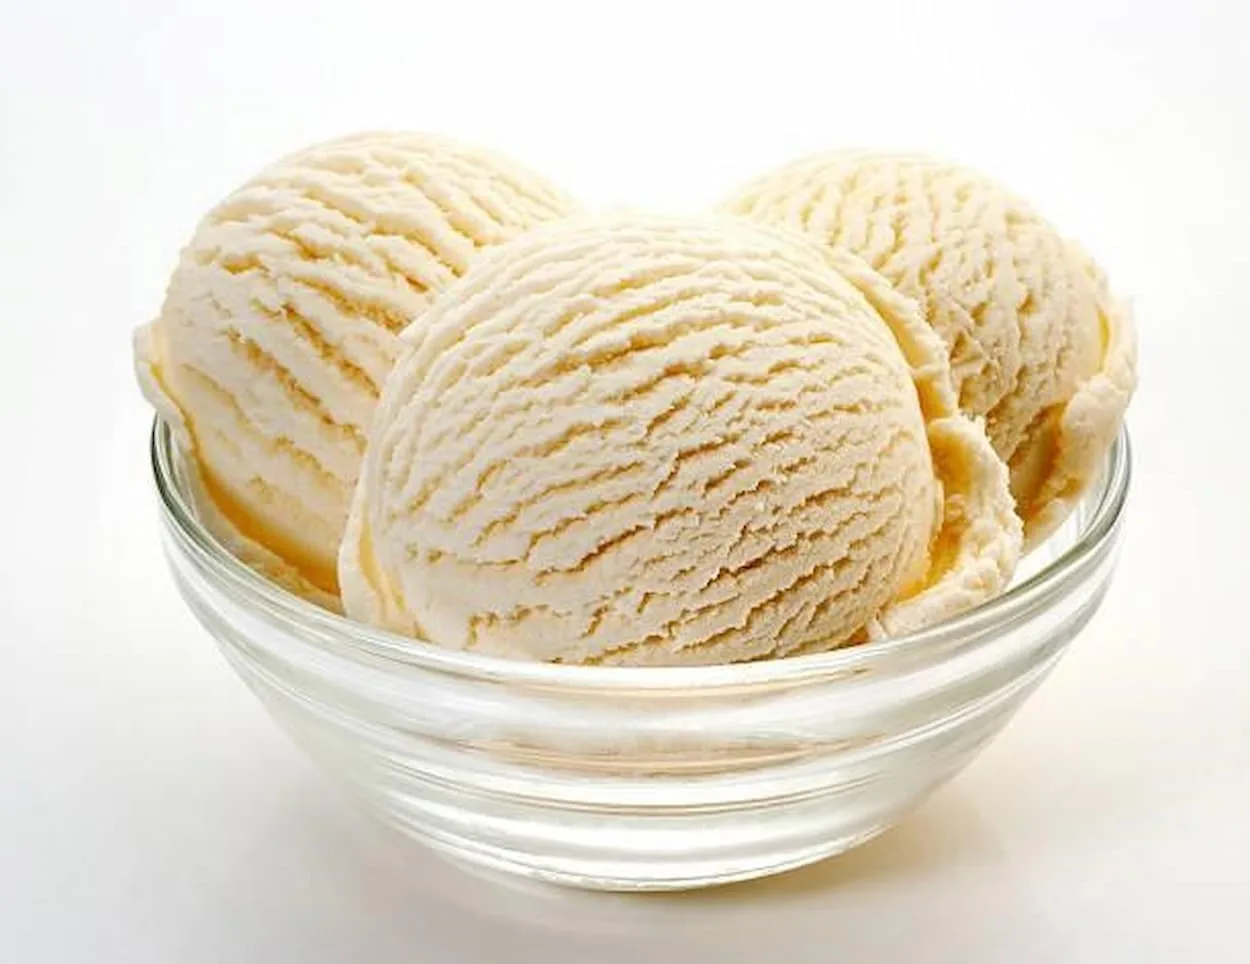  Vanilla Classic VS Vanilla Bean Ice Cream  - Dhammaan Farqiga u dhexeeya